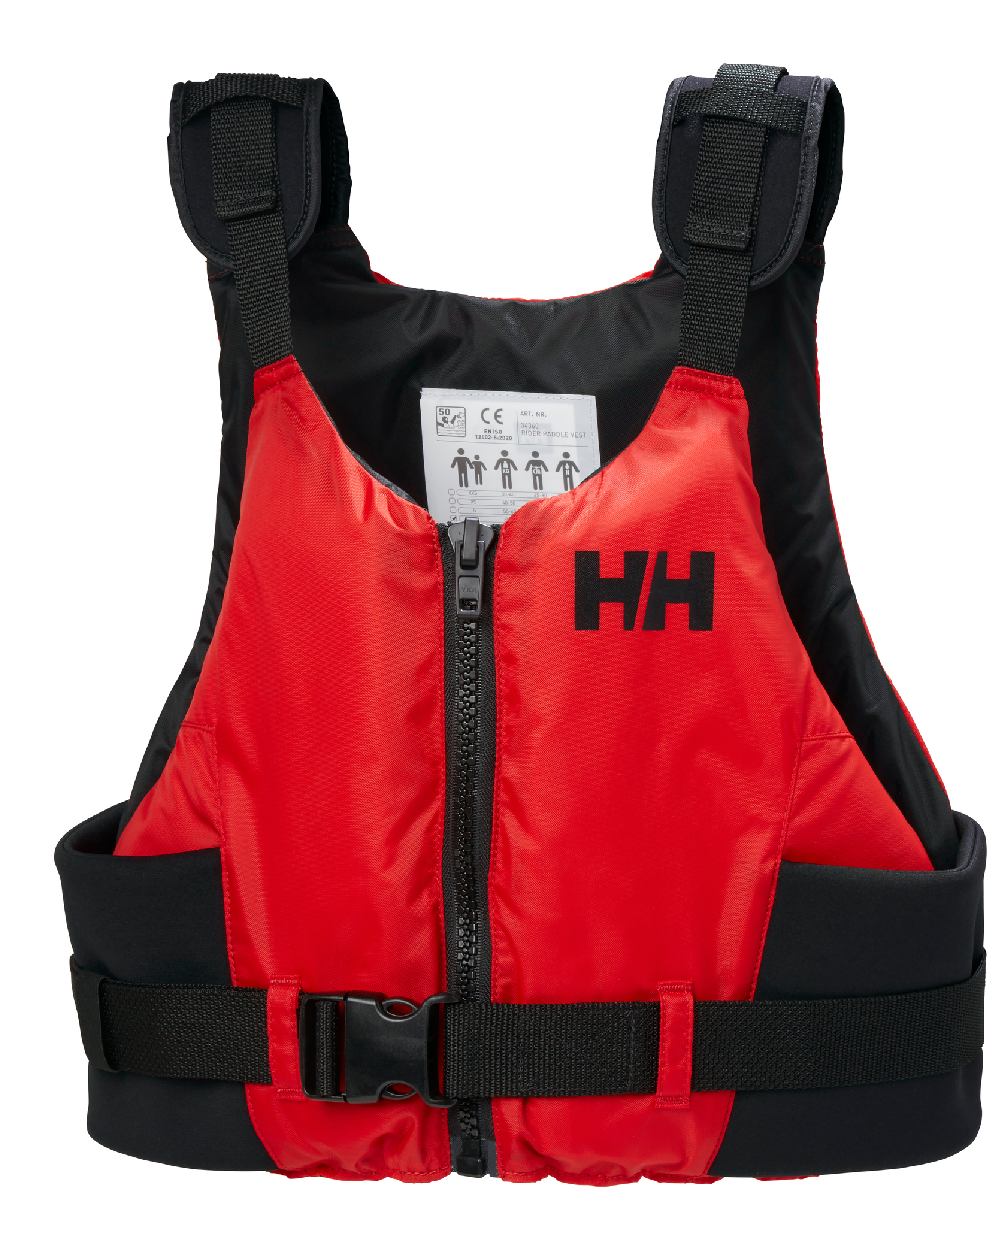 Alert Red coloured Helly Hansen Rider Paddle Life Vest on white background 